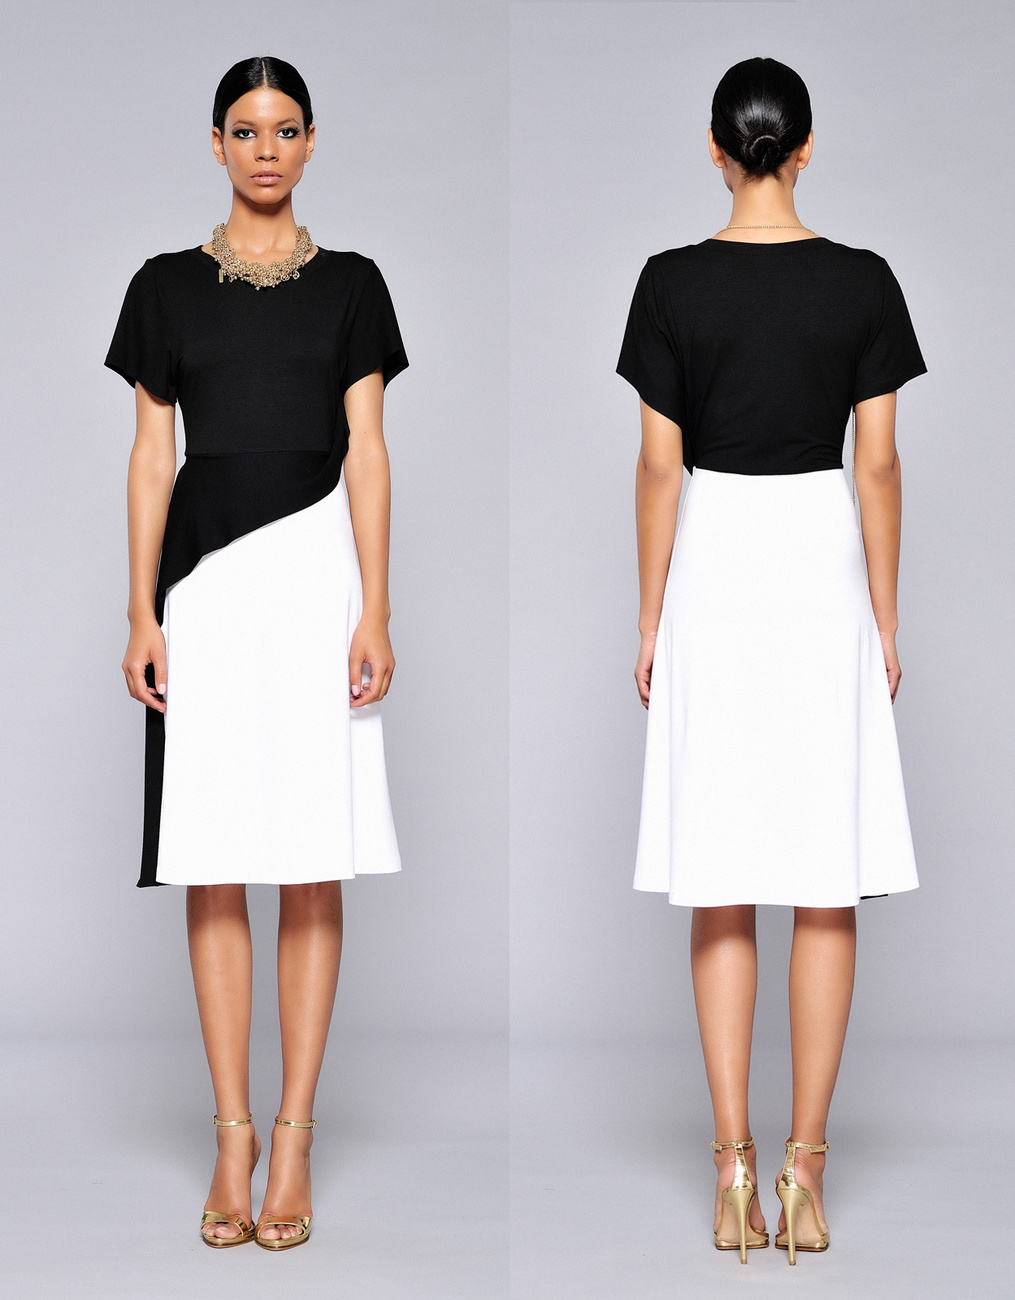 Fehér ruha fekete gallérral 69.500 forint.